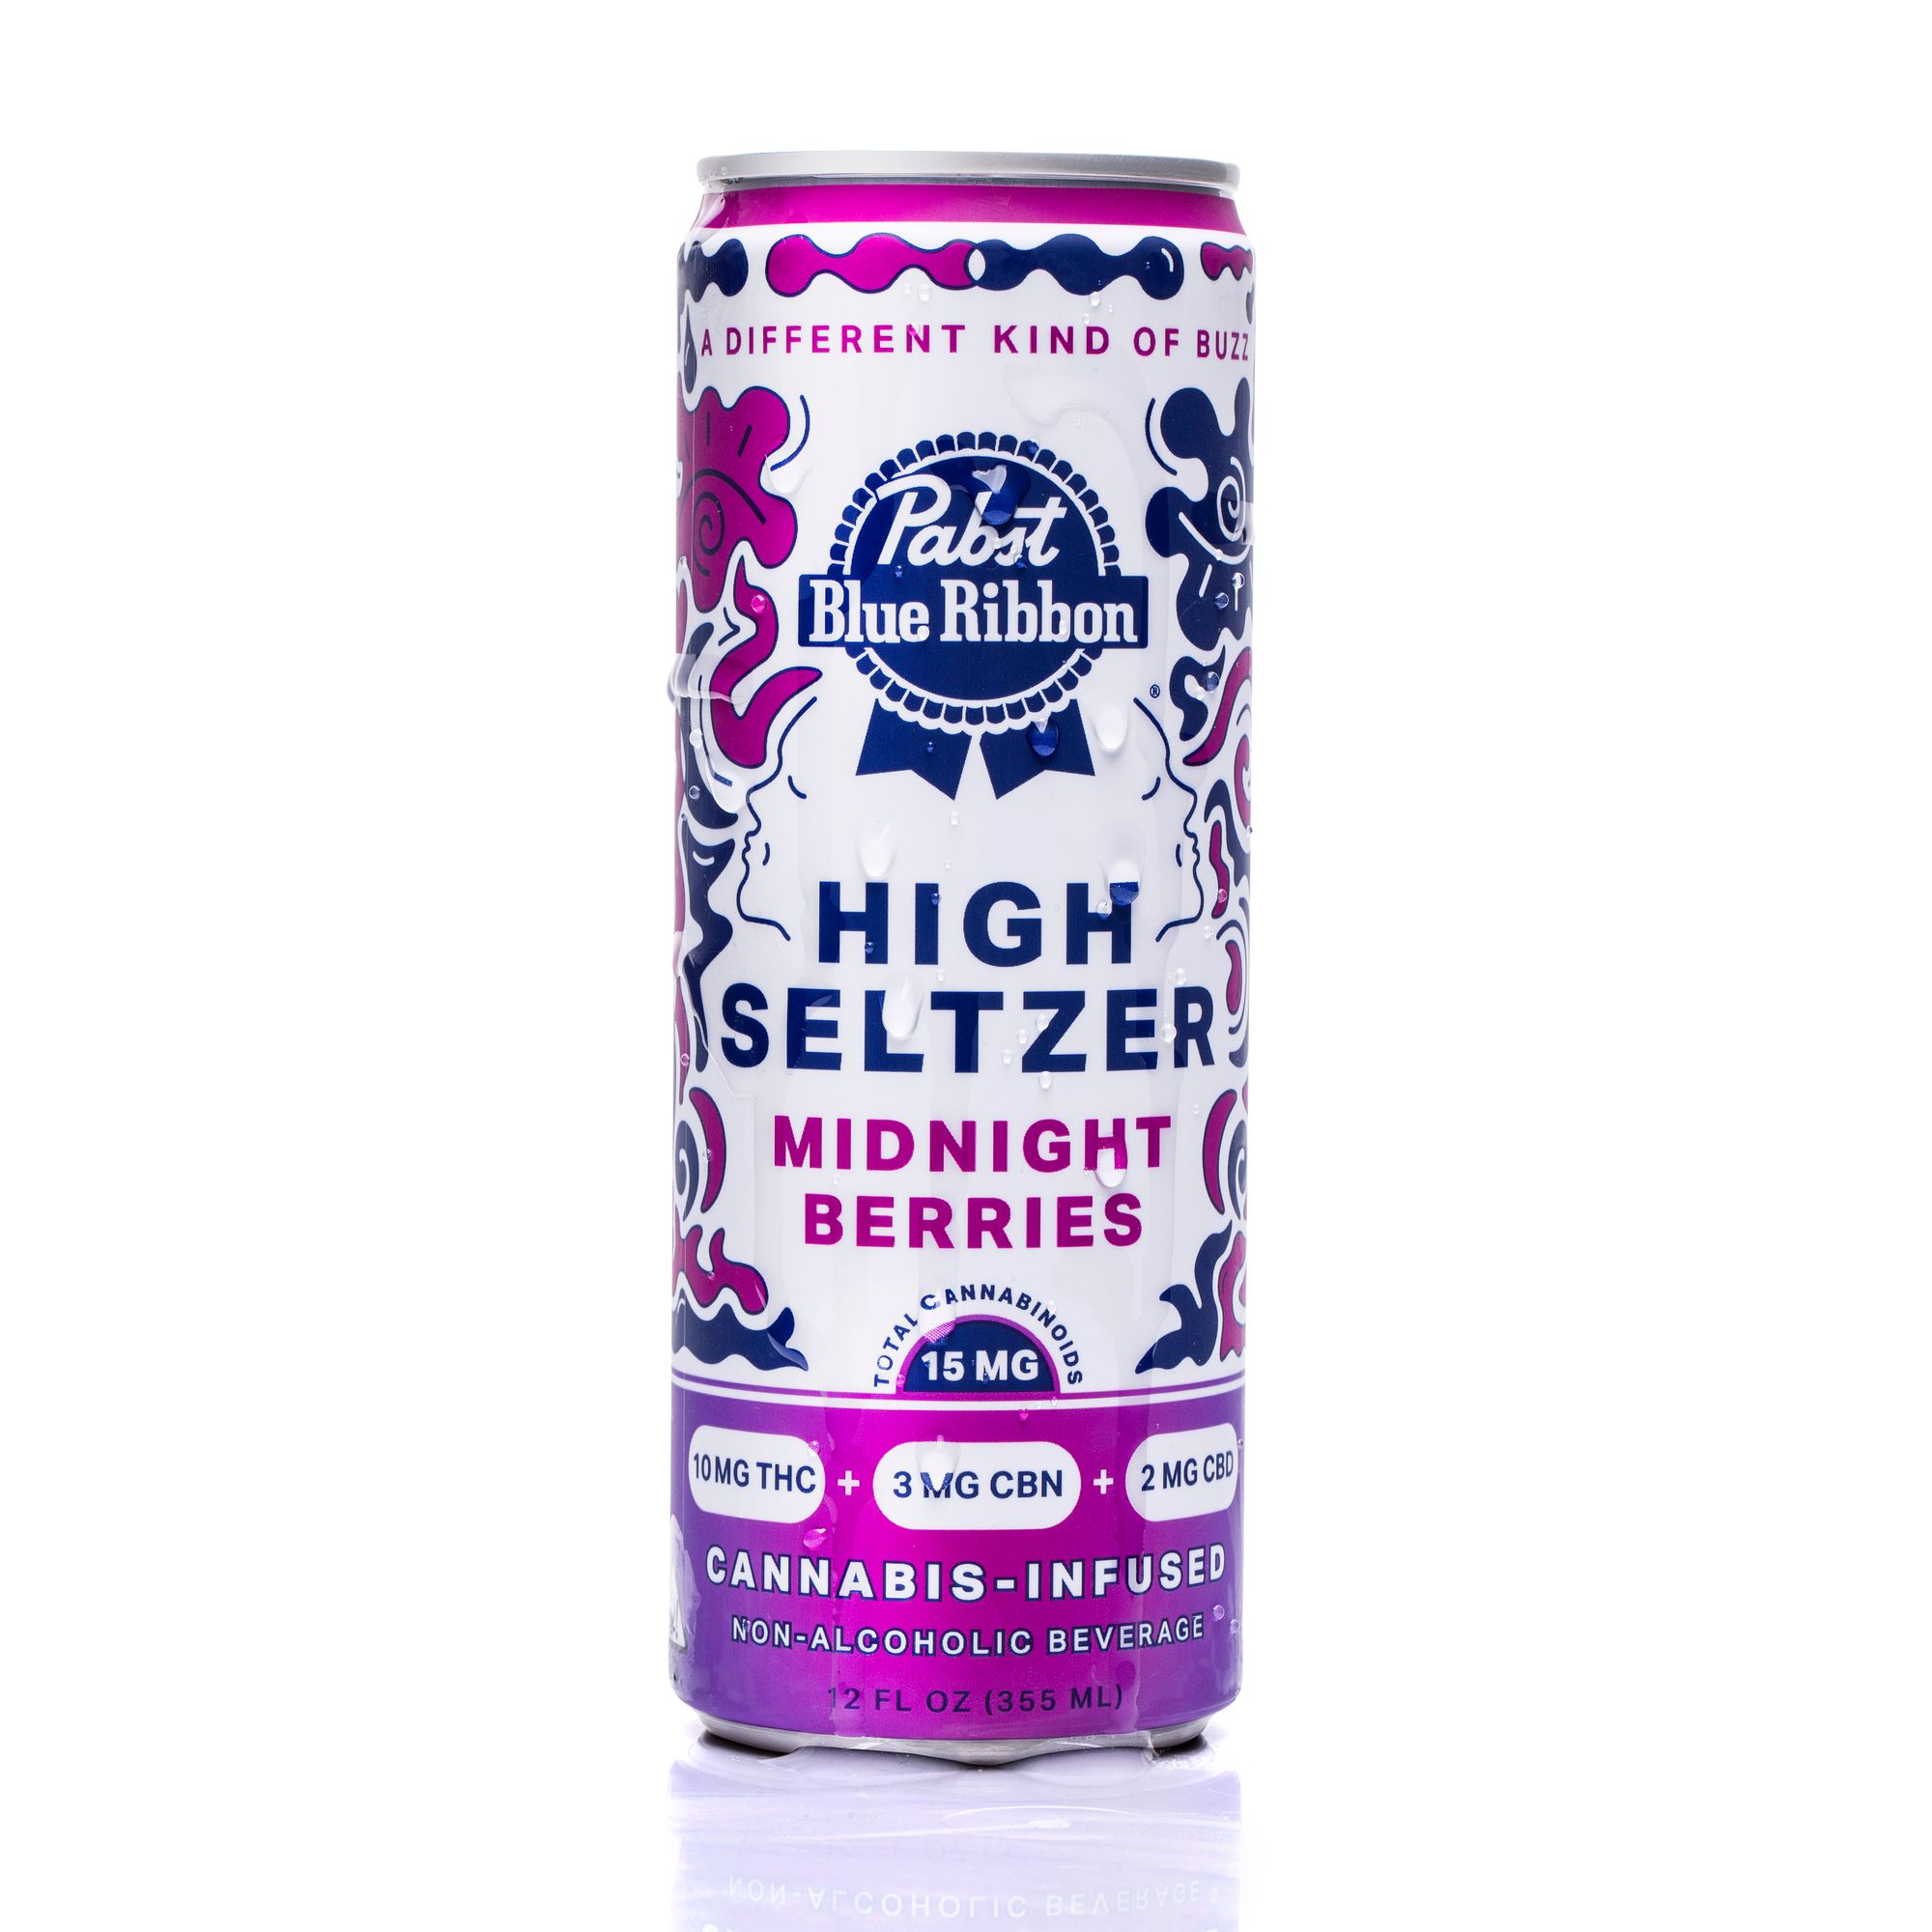 PBR High Seltzer Midnight Berries